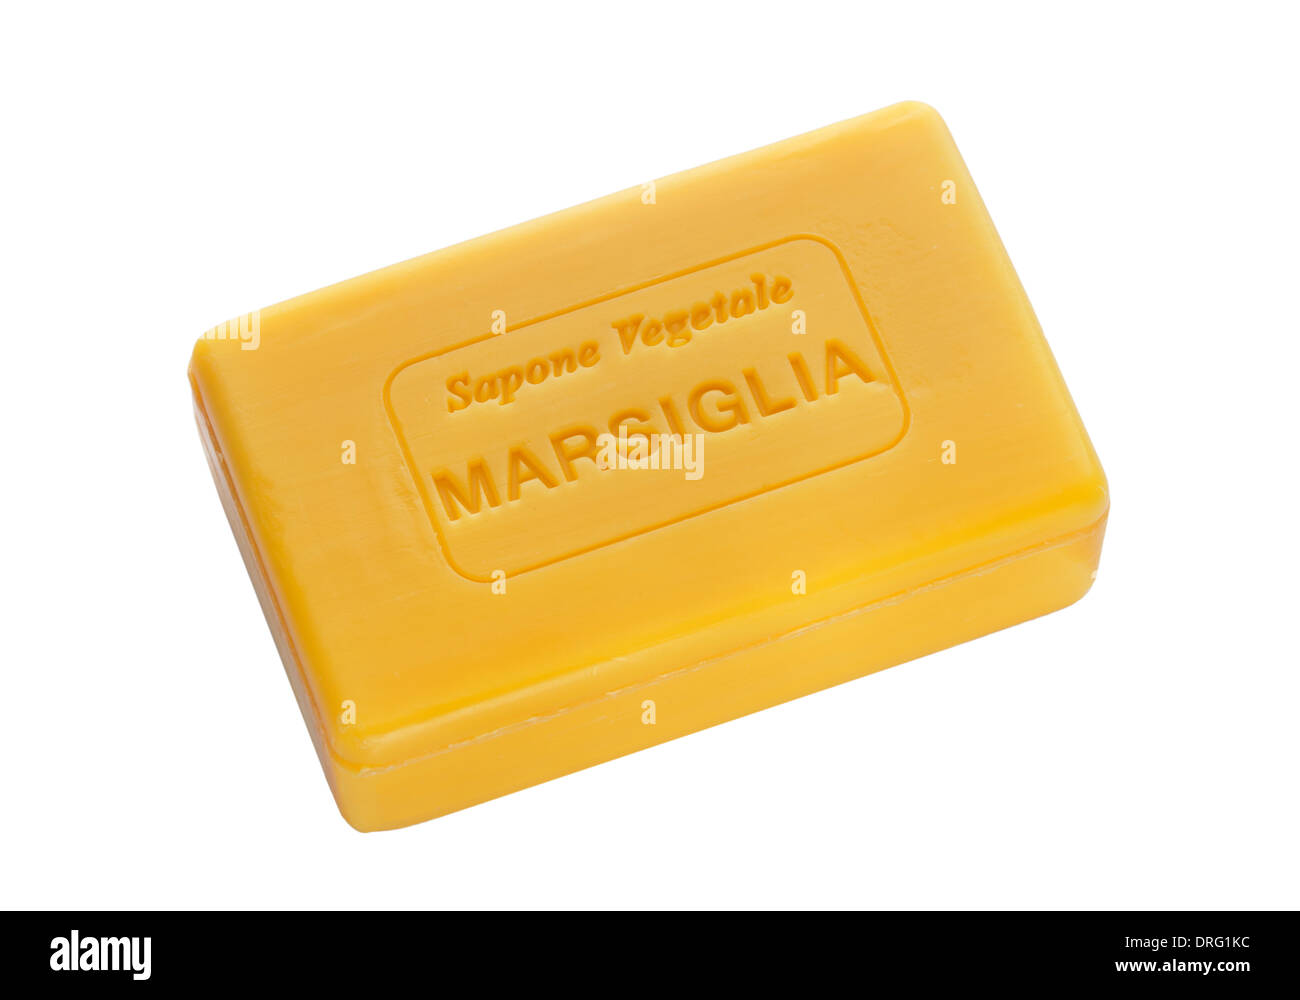 Natürliche Seife "Marsiglia" isolated on white Stockfoto